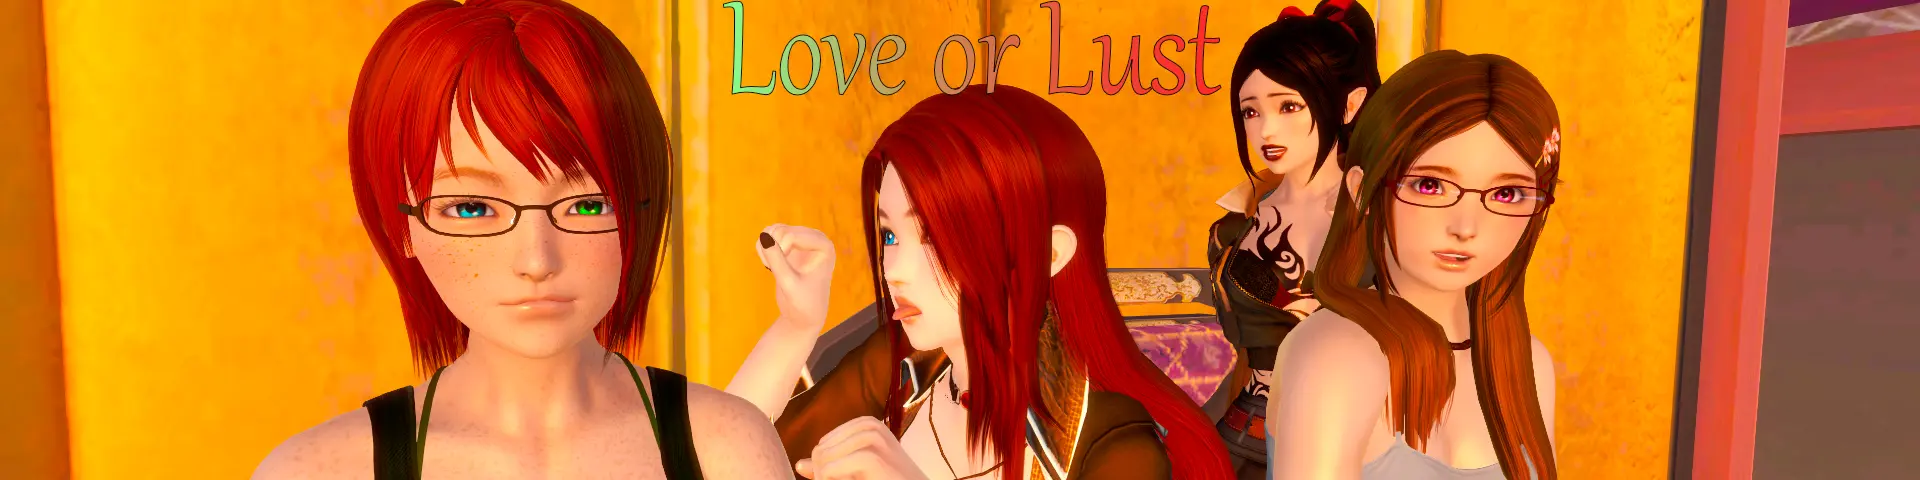 Love or Lust: Divine Proclivity [v0.2.1c] main image